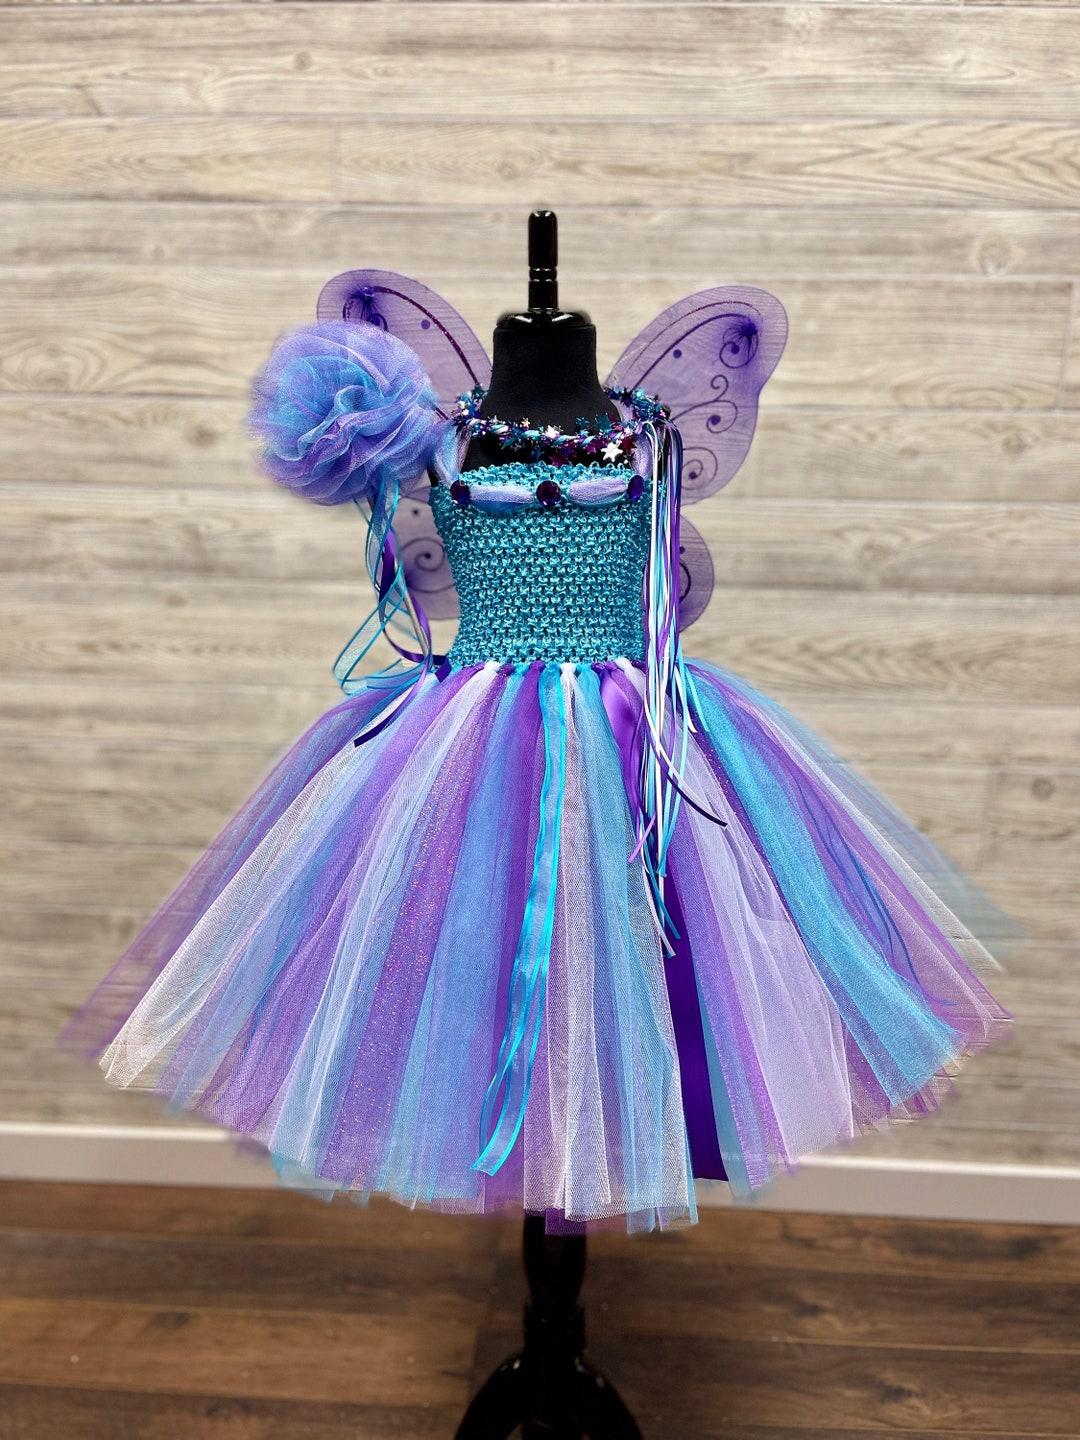 Disfraz Barbie - Disraz Rainbow Magic - Disfraces Niñas